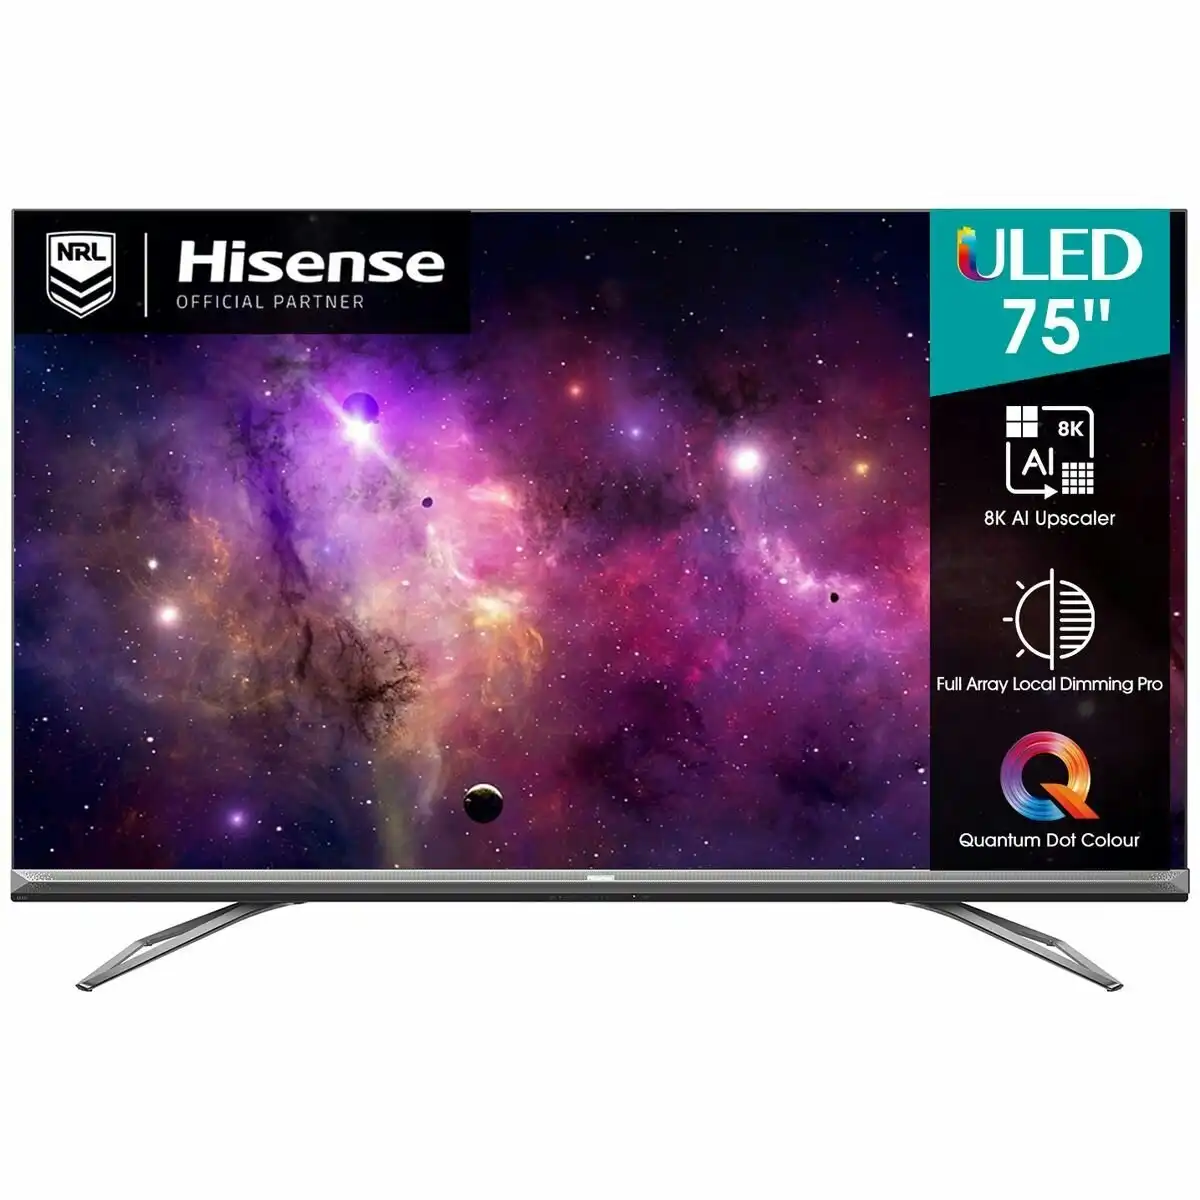 Hisense 75 Inch U80G 8K UHD HDR Smart ULED TV